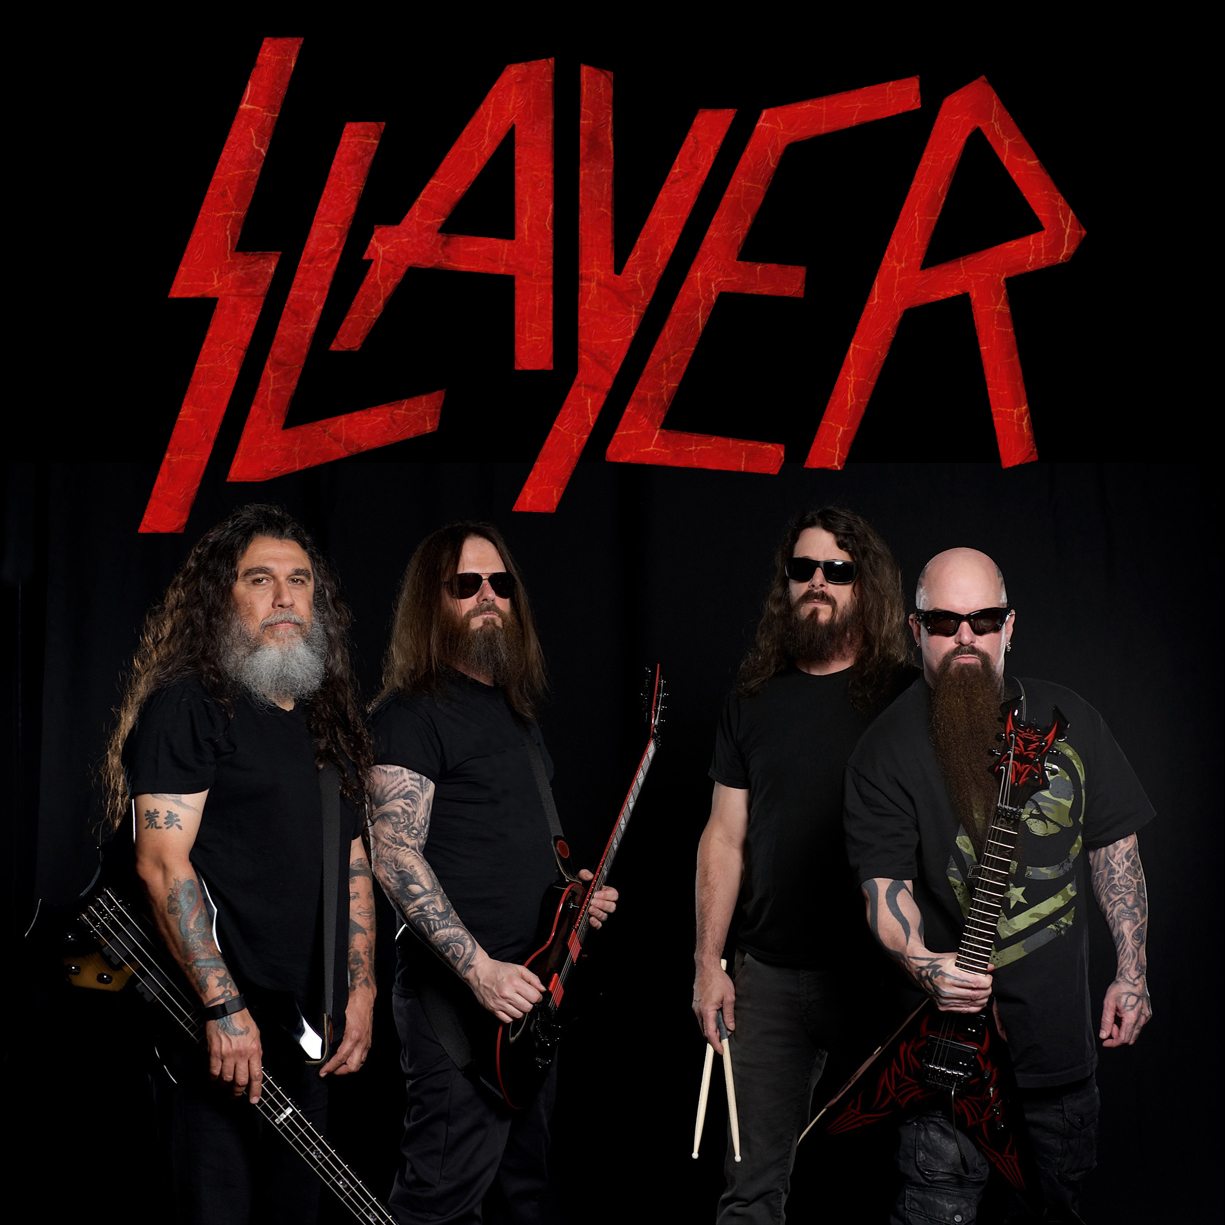 Training slayer последняя версия. Slayer Band. Группа Слейер дискография. Слейер группа 1986. Slayer 1981.